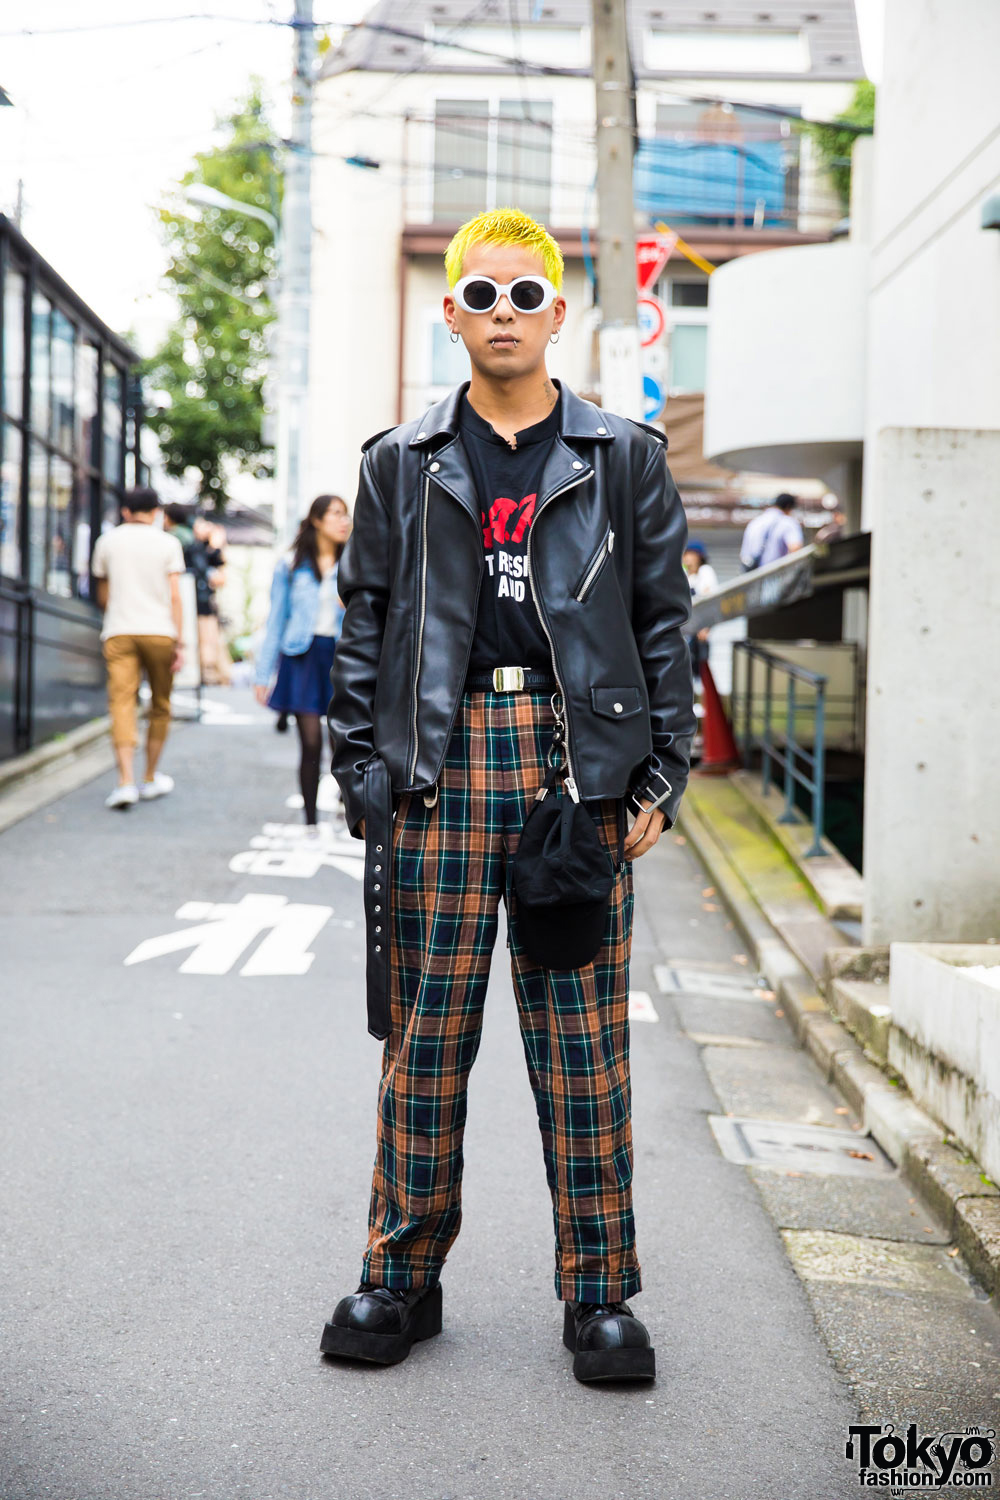 Harajuku Guy S Punk Inspired Street Style W Yellow Hair Biker Jacket